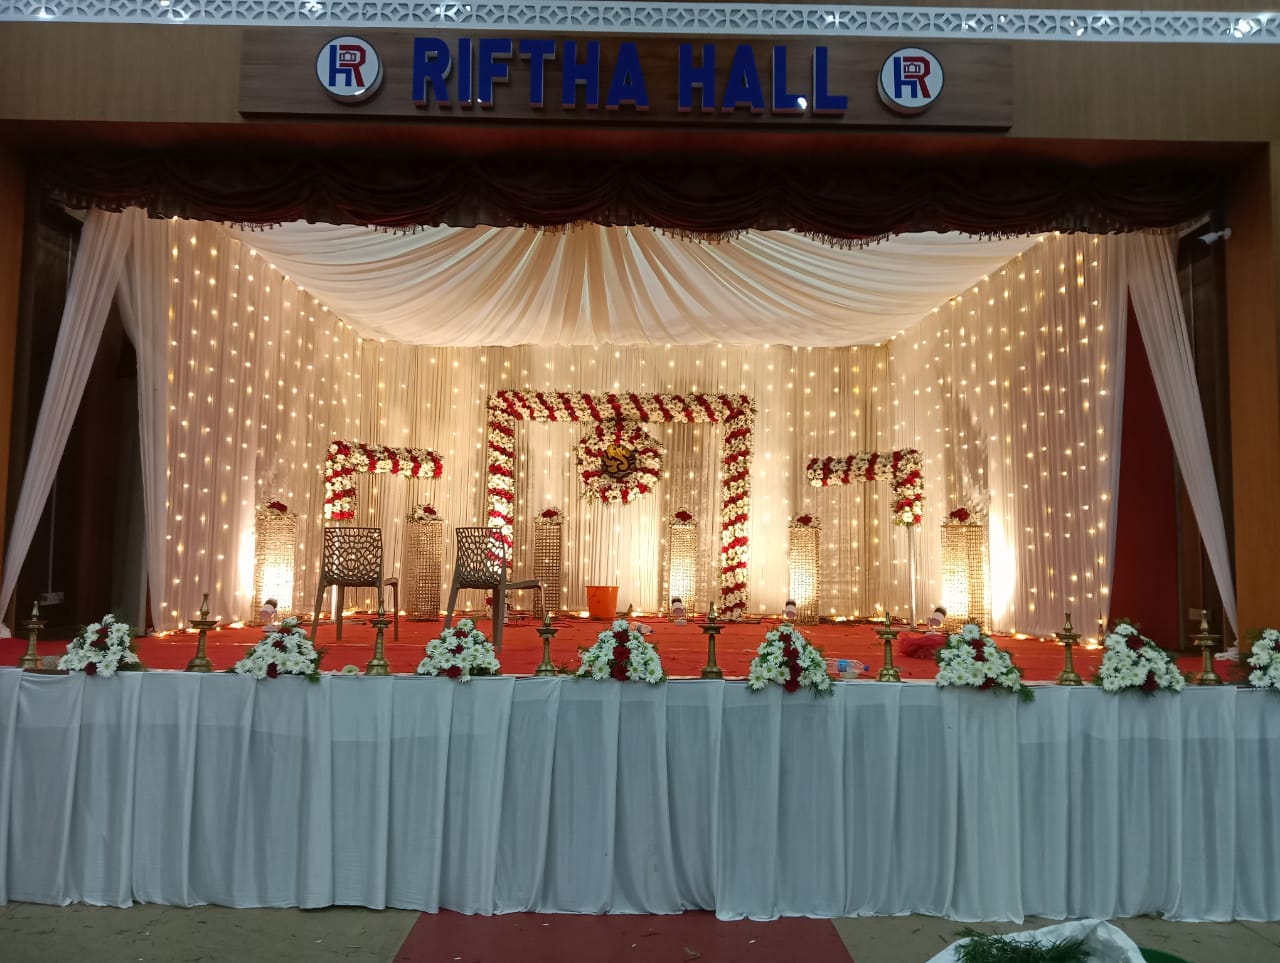 Riftha Hall+Riftha Hall